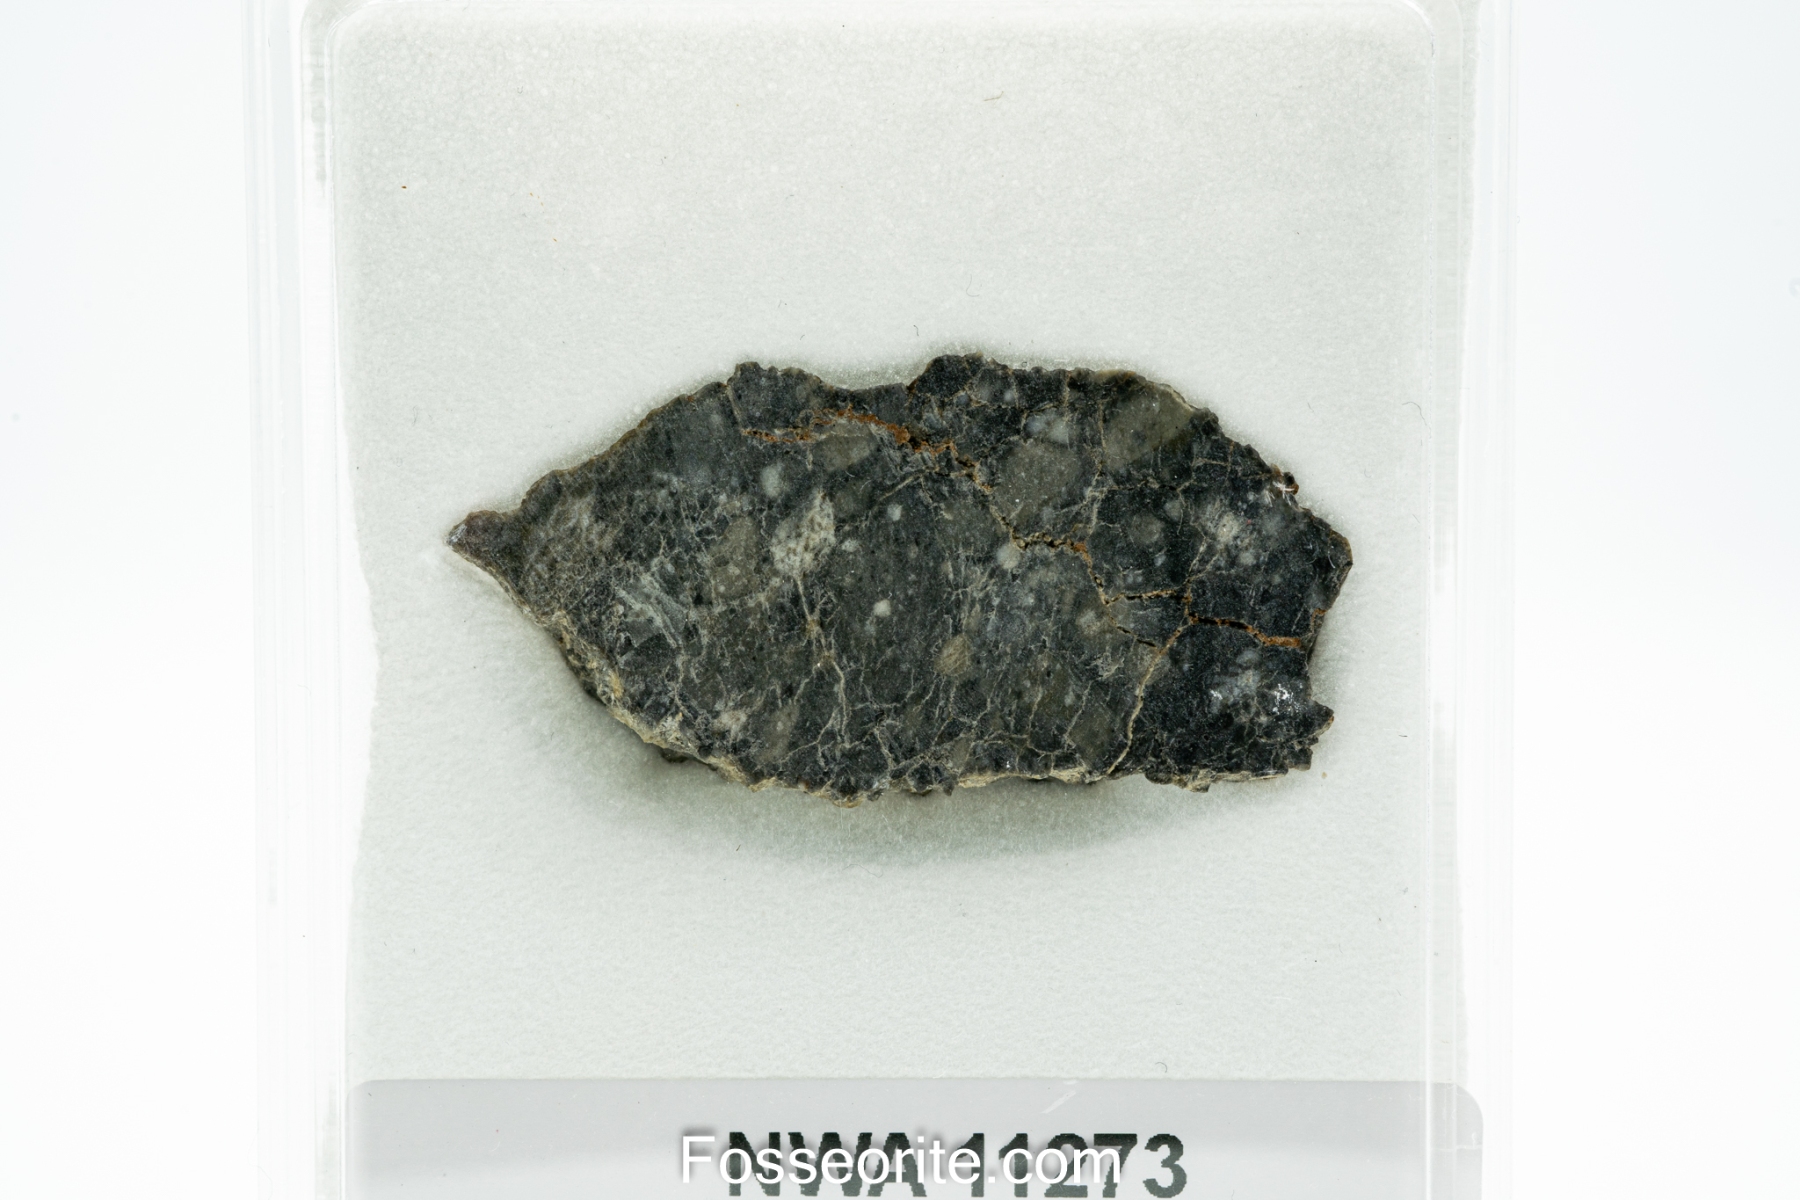 NWA 11273 Lunar Achondrite Meteorite